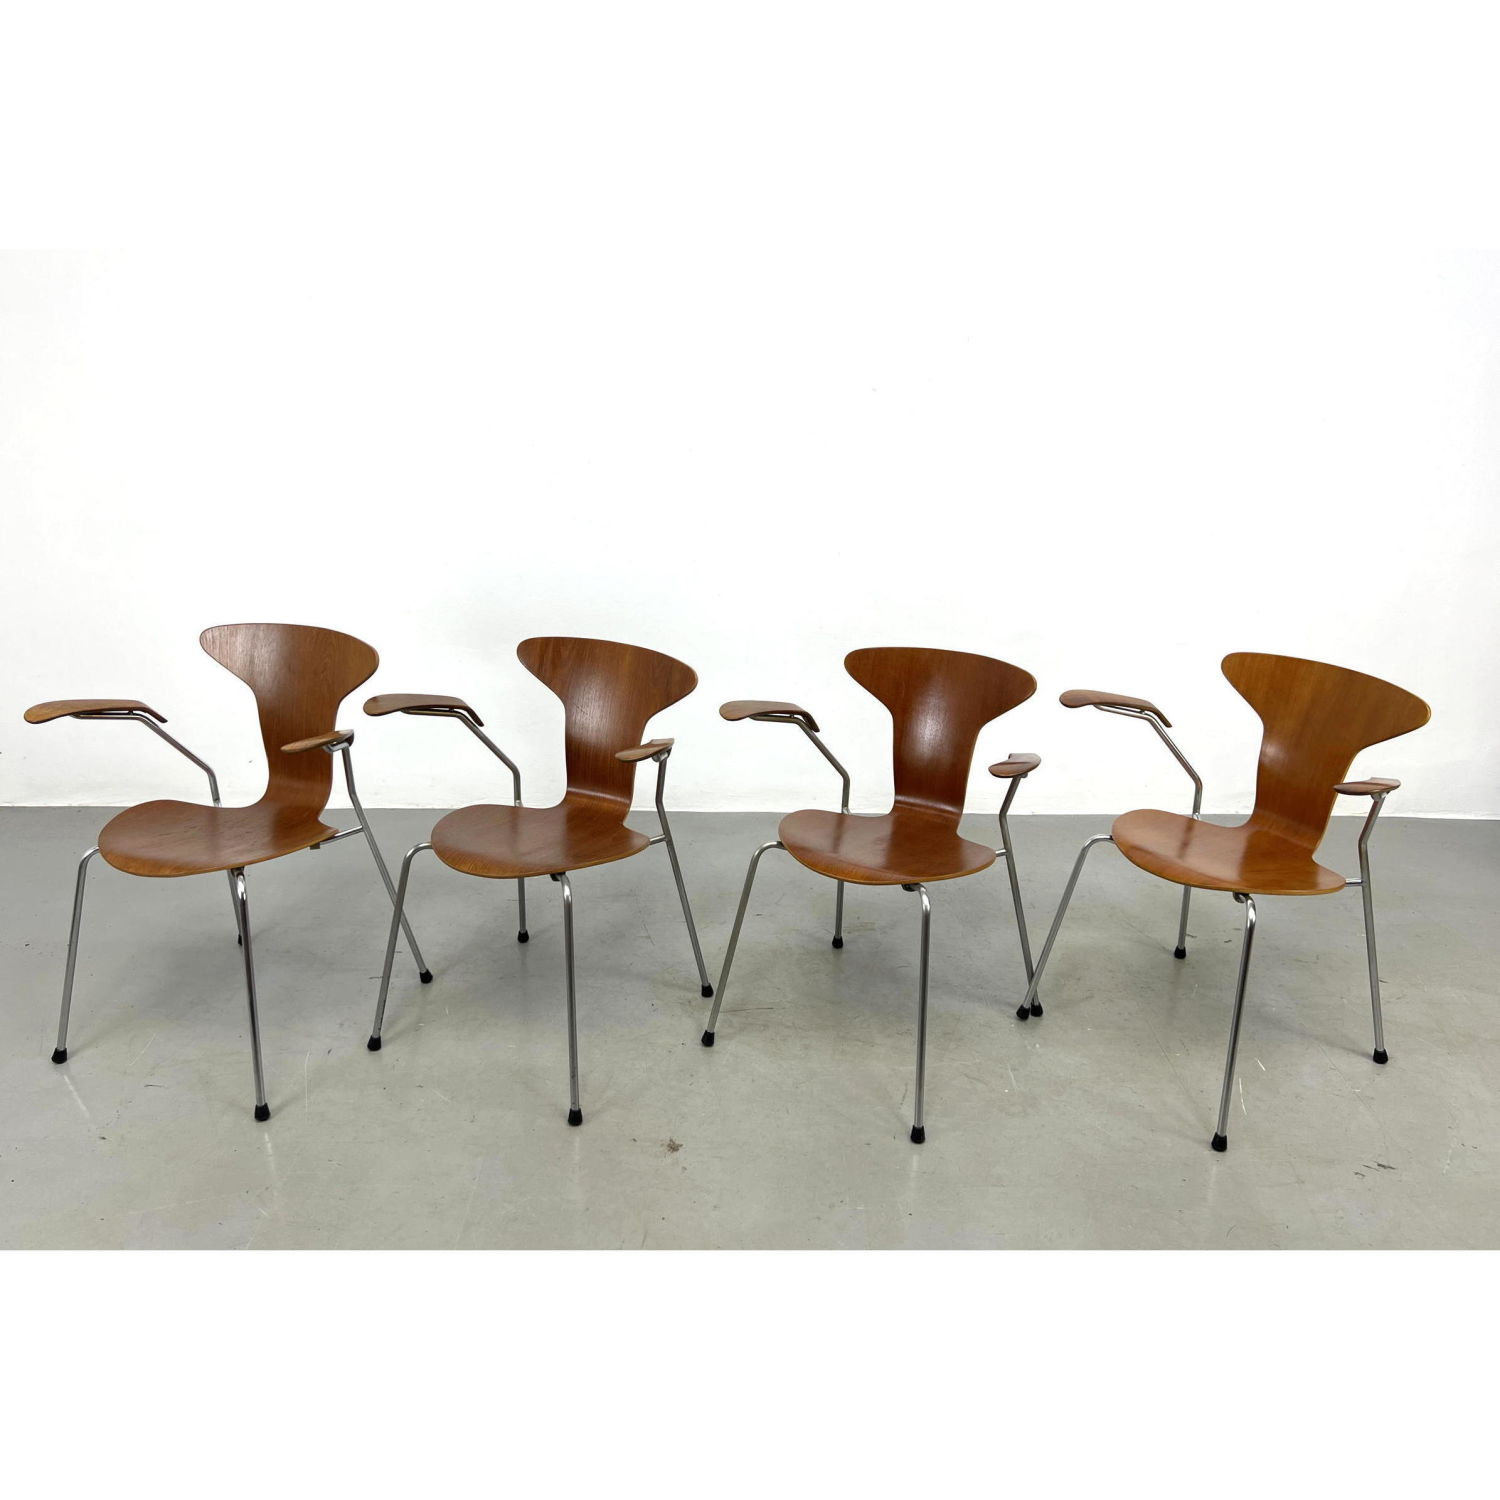 Set 4 Early Arne Jacobsen Arm Chairs  2b89b1